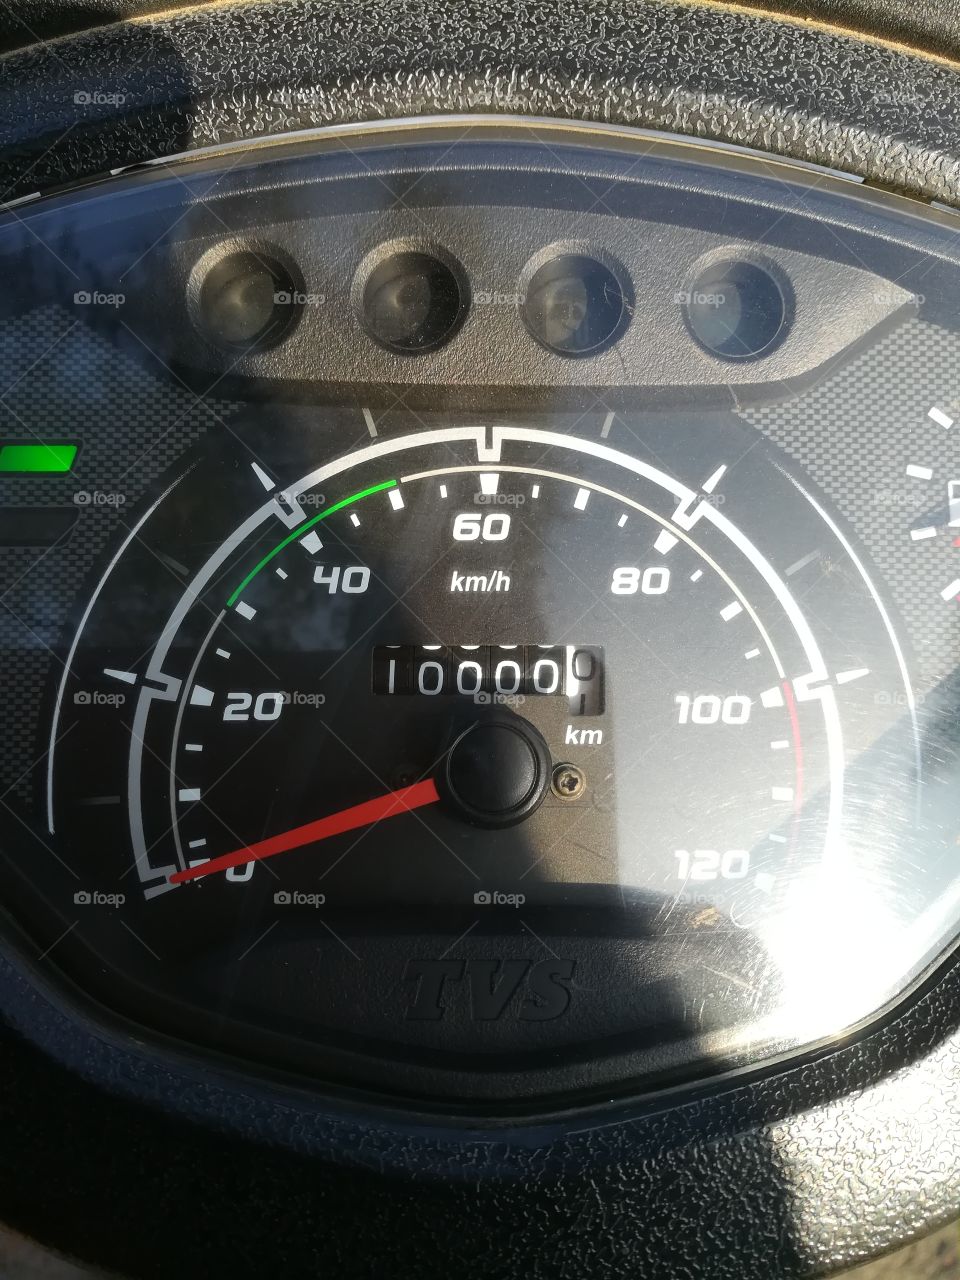 10,000 km